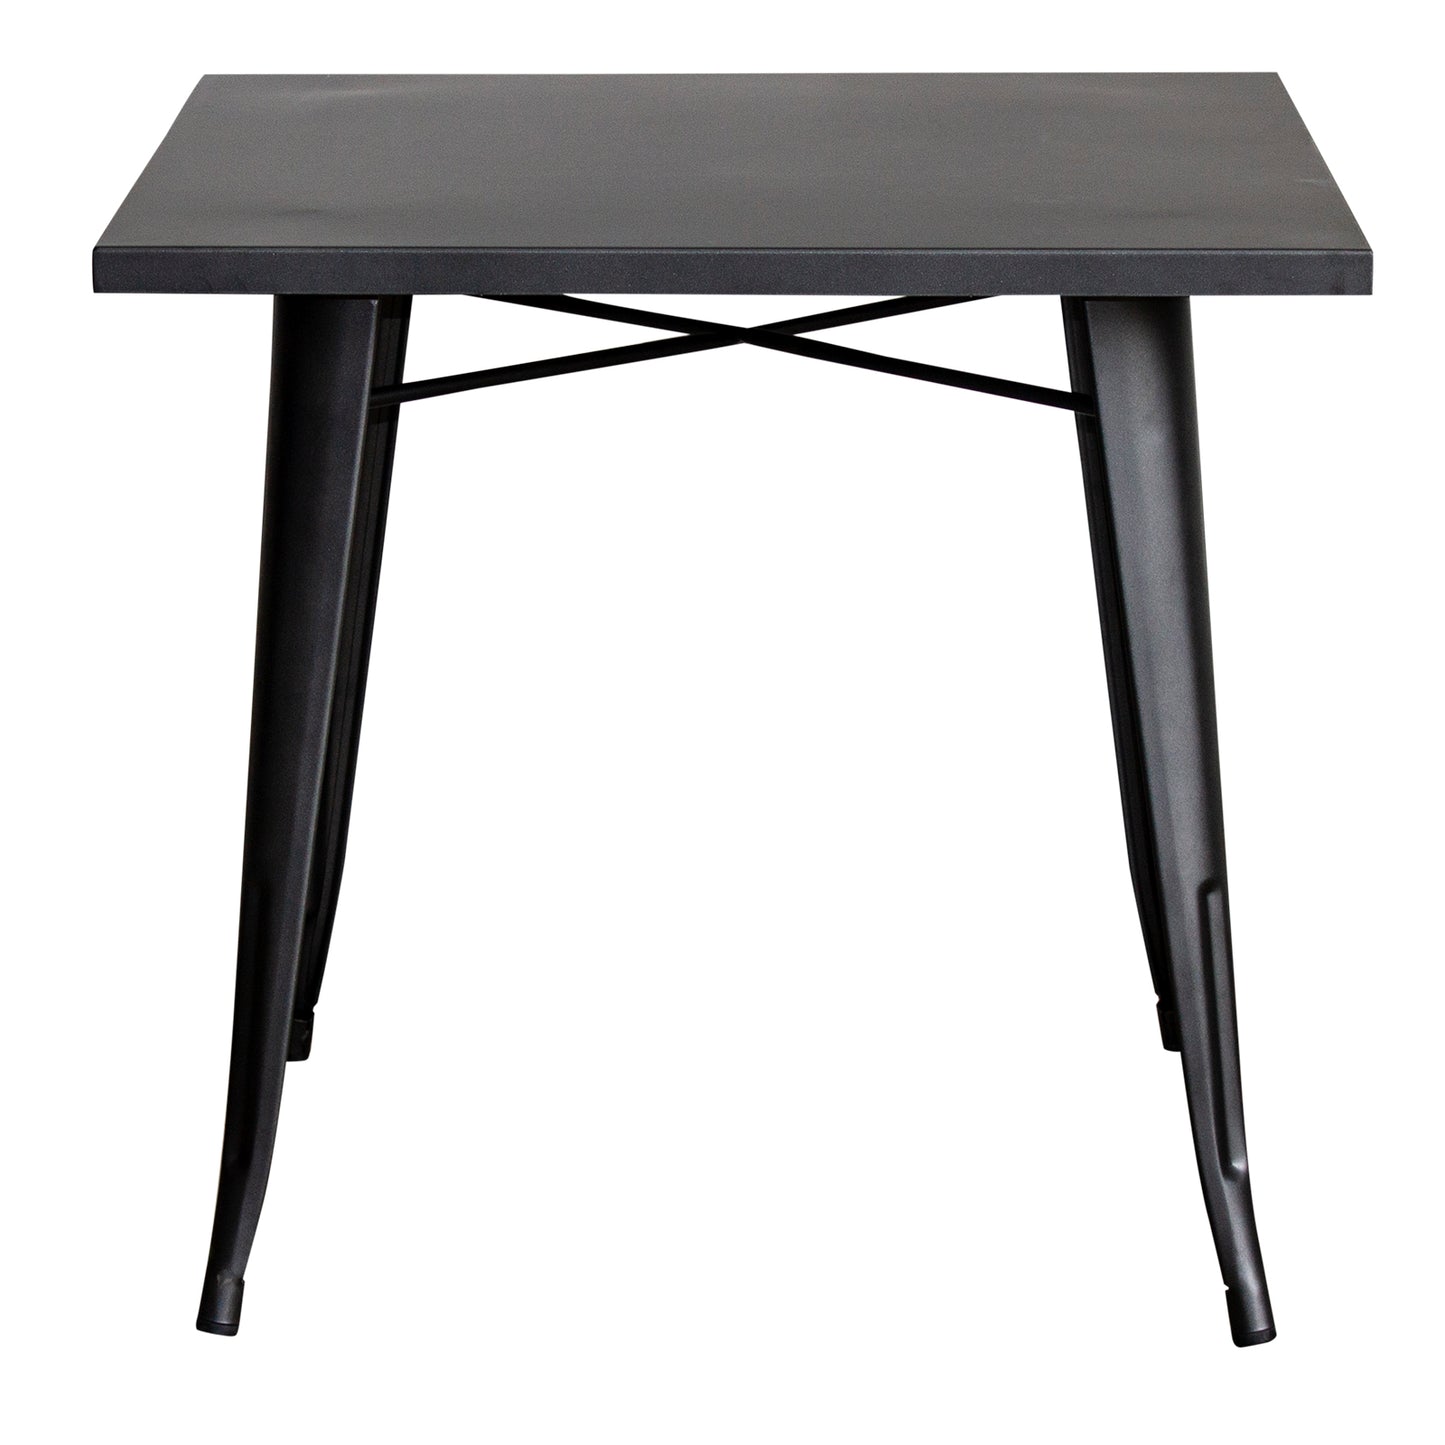 5PC Belvedere Table & Florence Chair Set - Onyx Matt Black